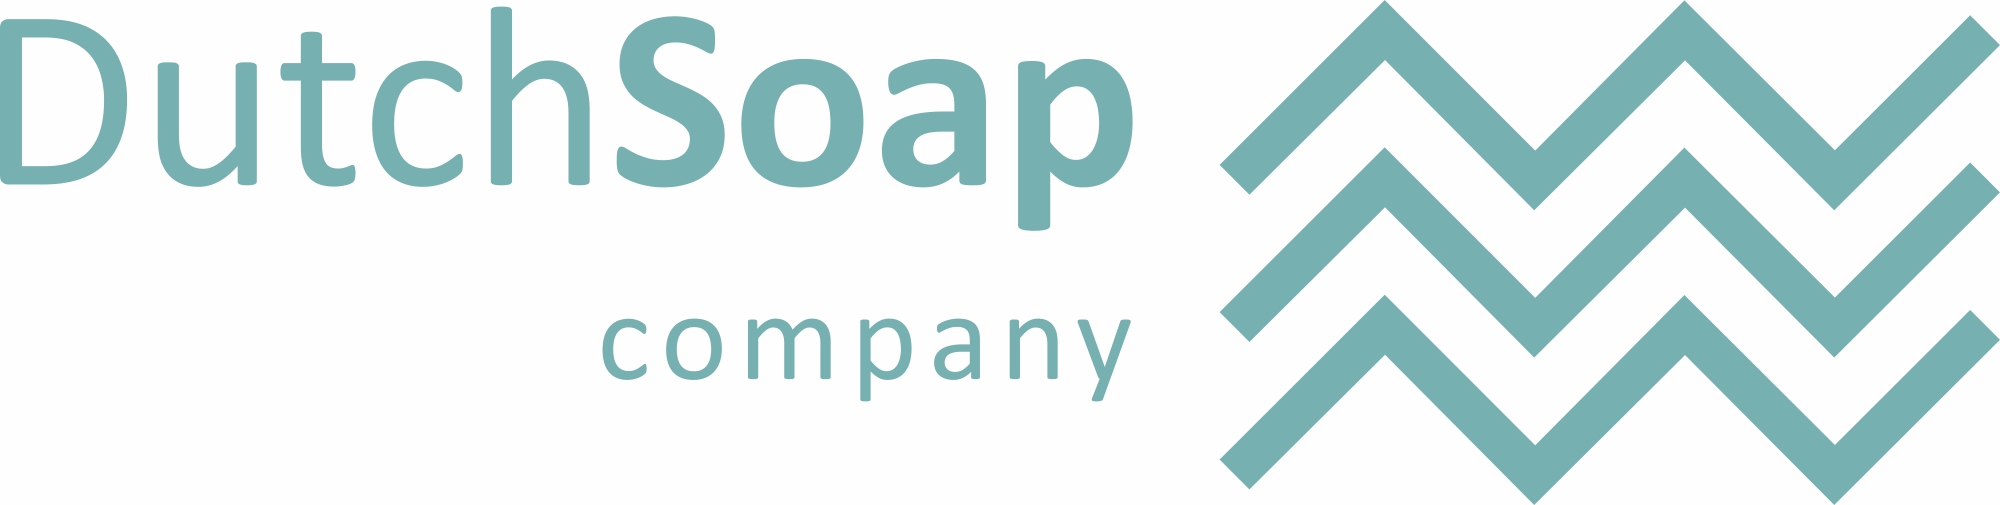 Dutch Soap Company